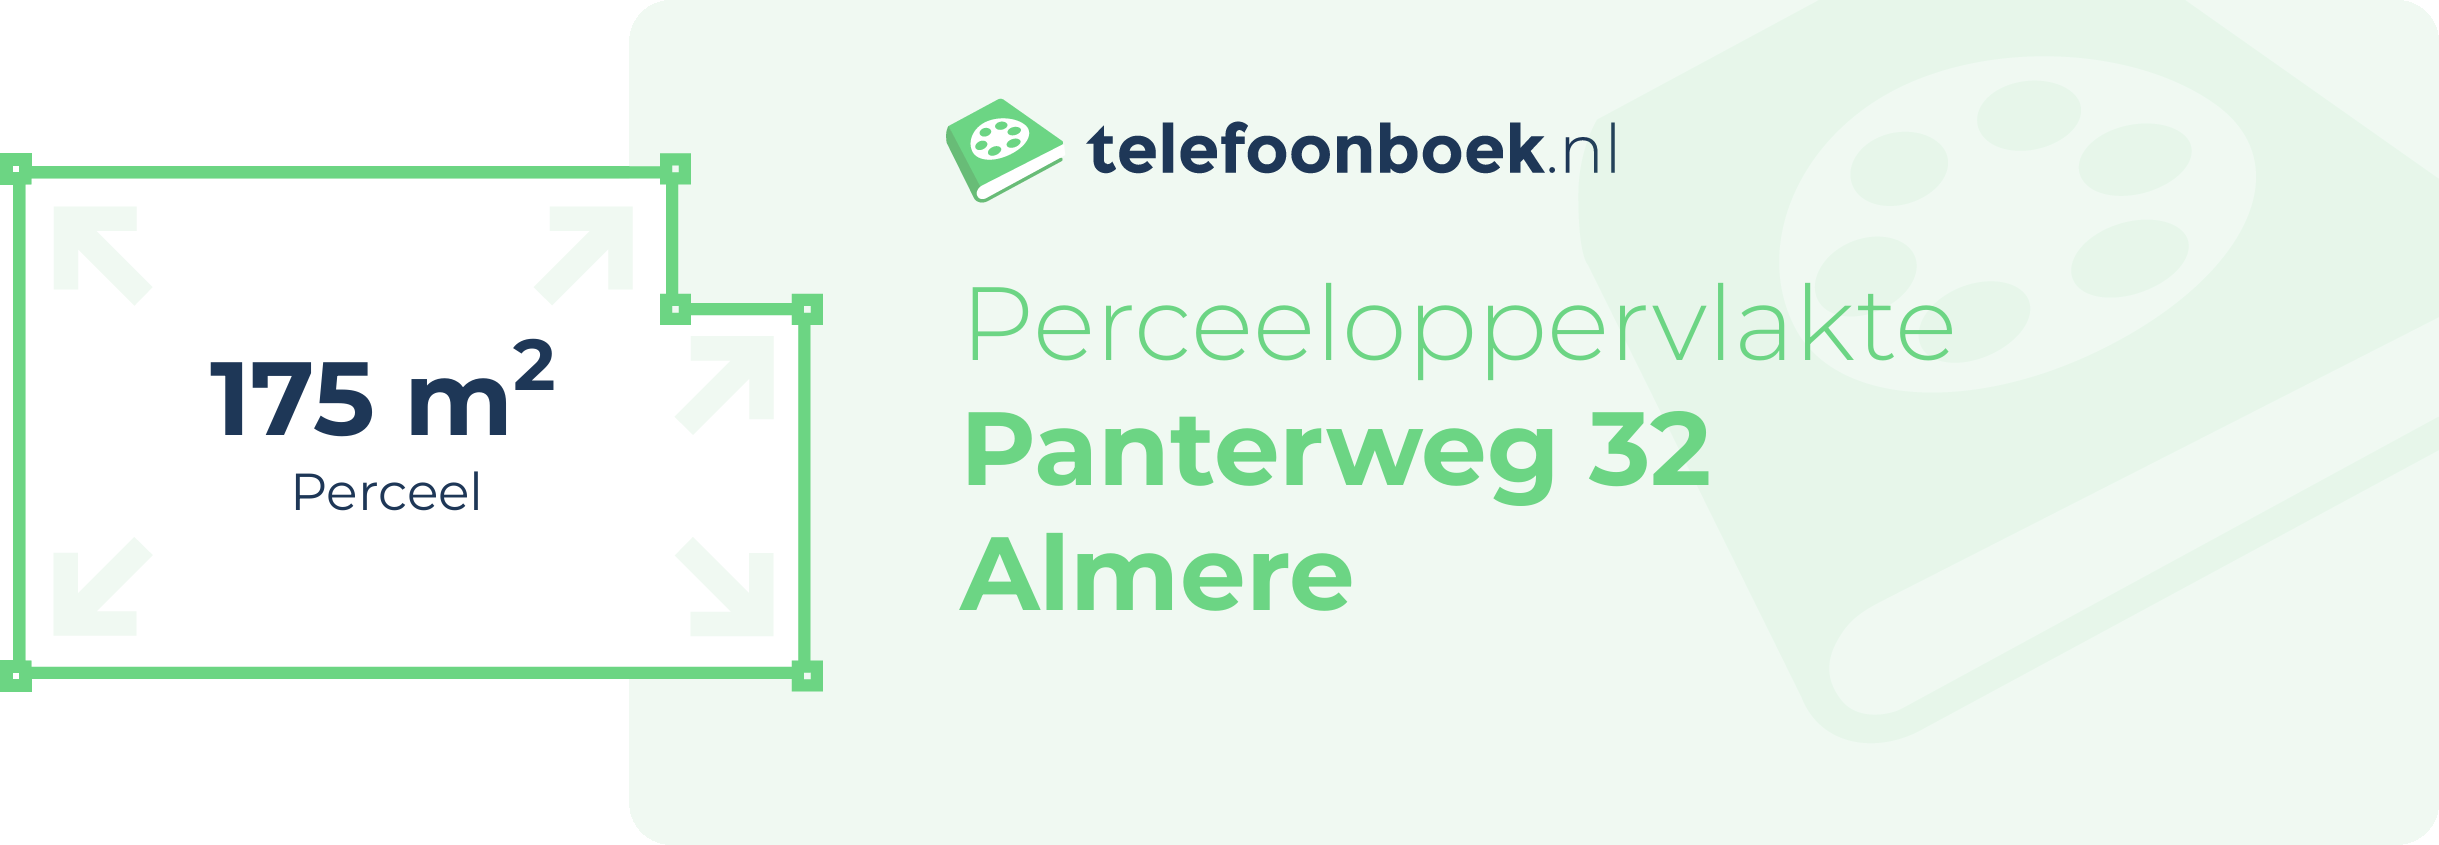 Perceeloppervlakte Panterweg 32 Almere